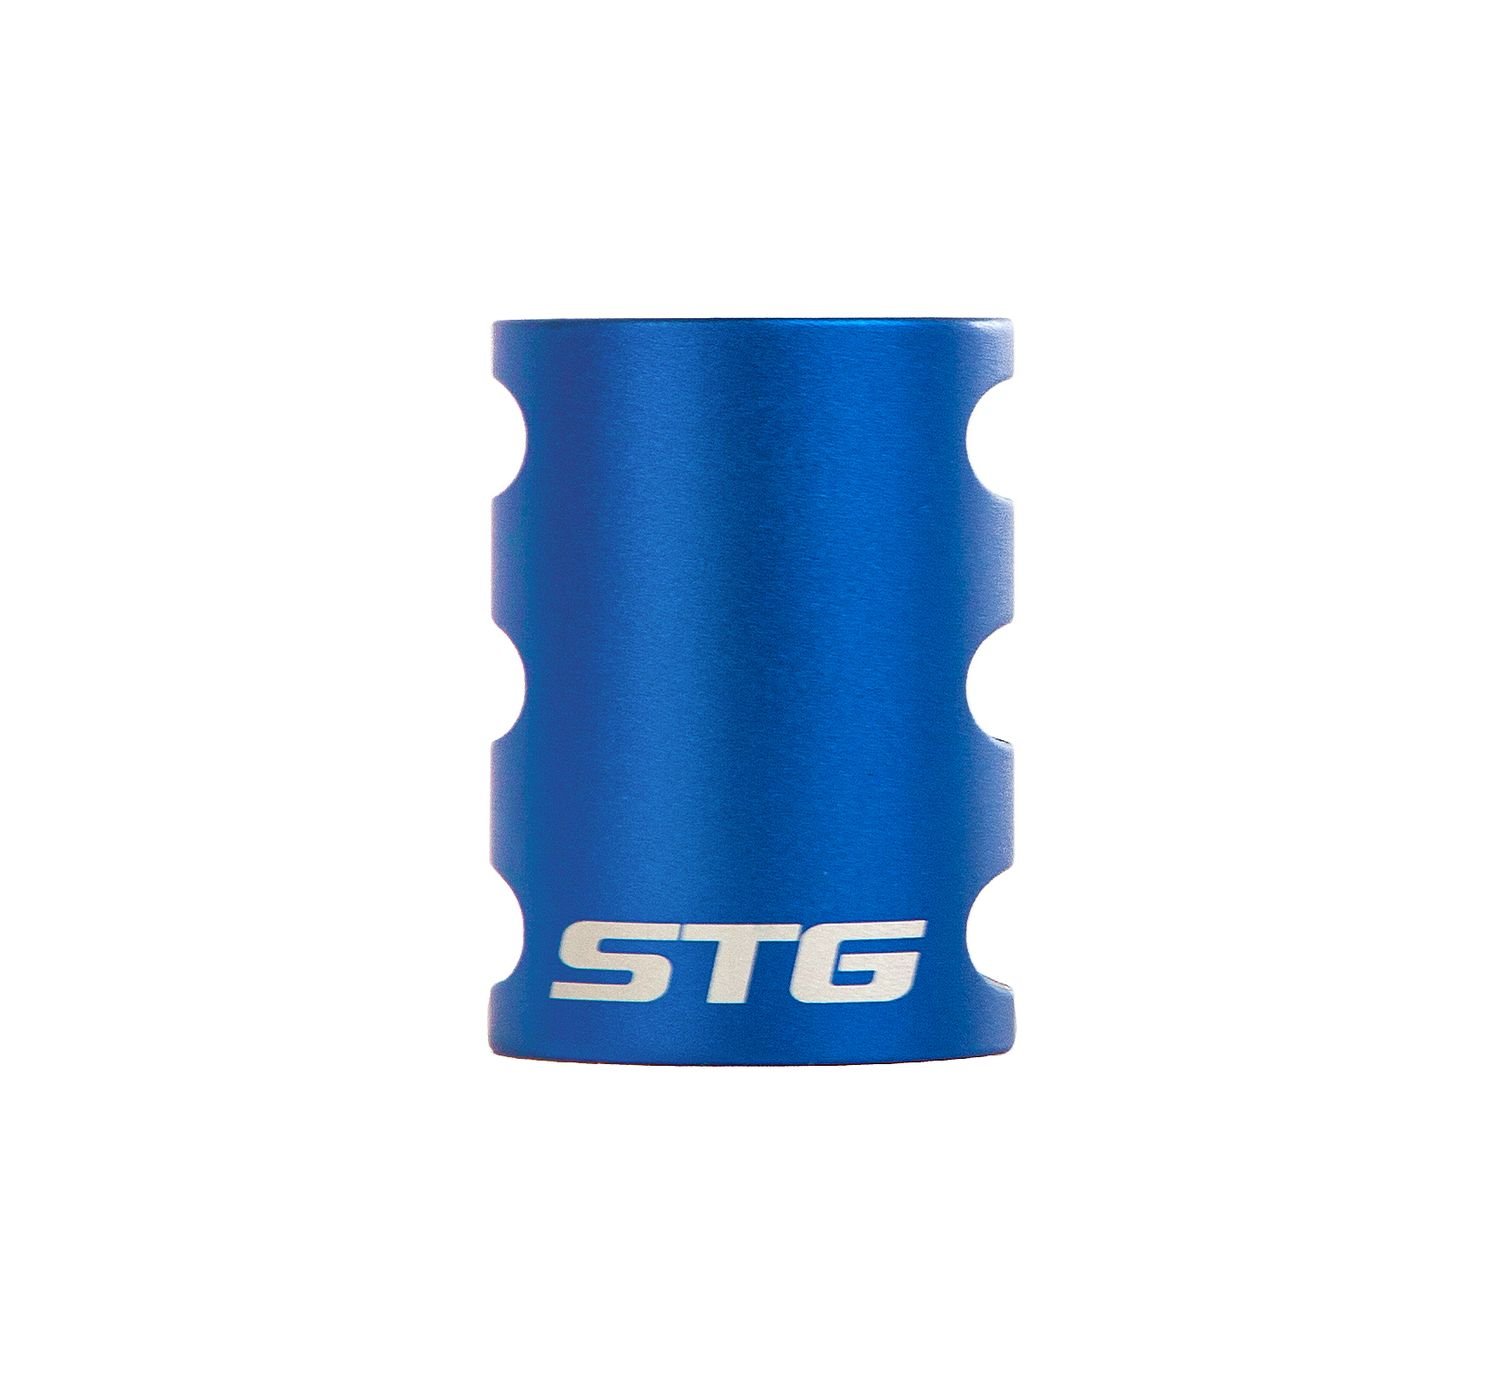 Зажим STG с проставкой для трюкового самоката, на 3 болта для компрессии HIC, синий, Х105143 купить на ЖДБЗ.ру - фотография № 2